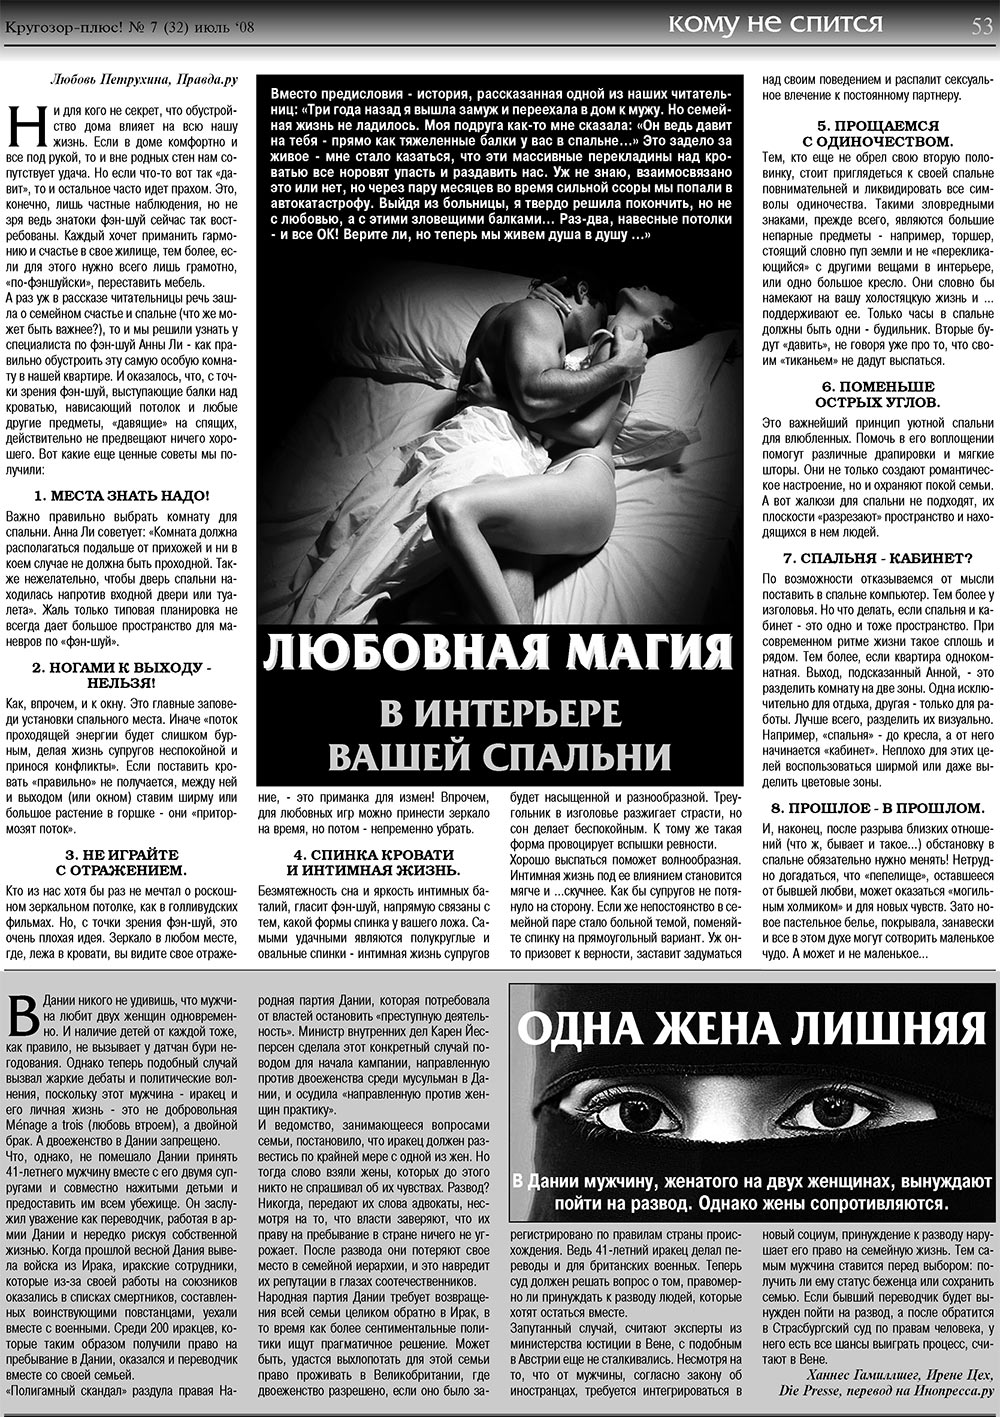 Кругозор плюс! (газета). 2008 год, номер 7, стр. 53